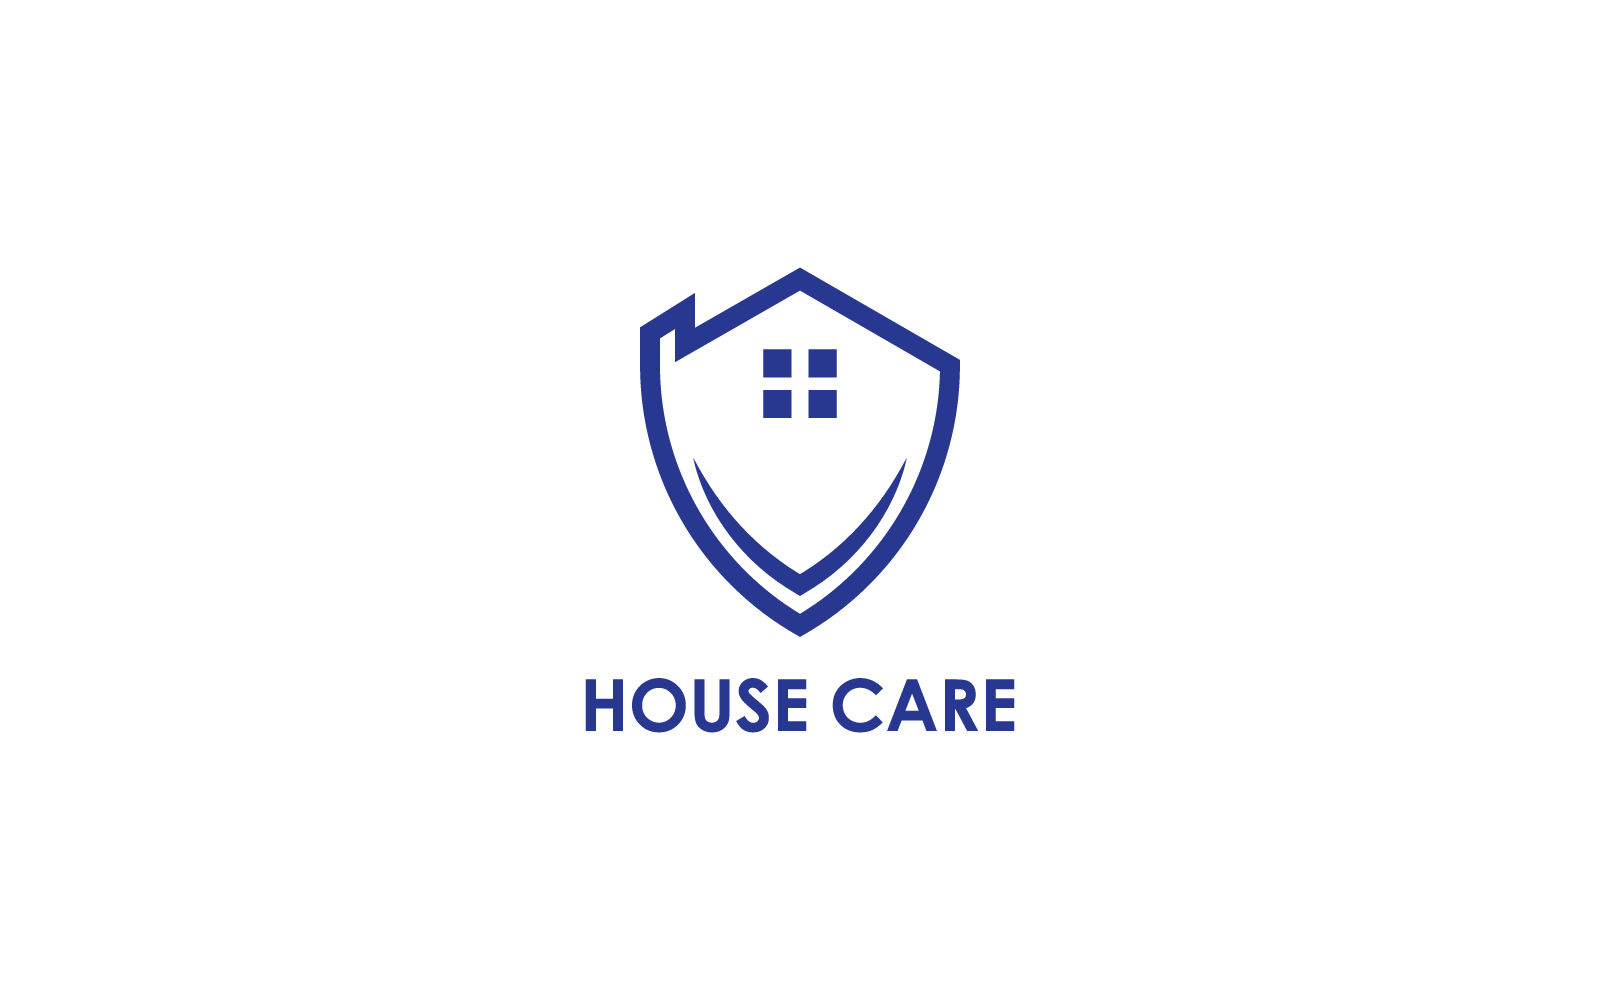 Home and shield protection logo design vector Logo Template